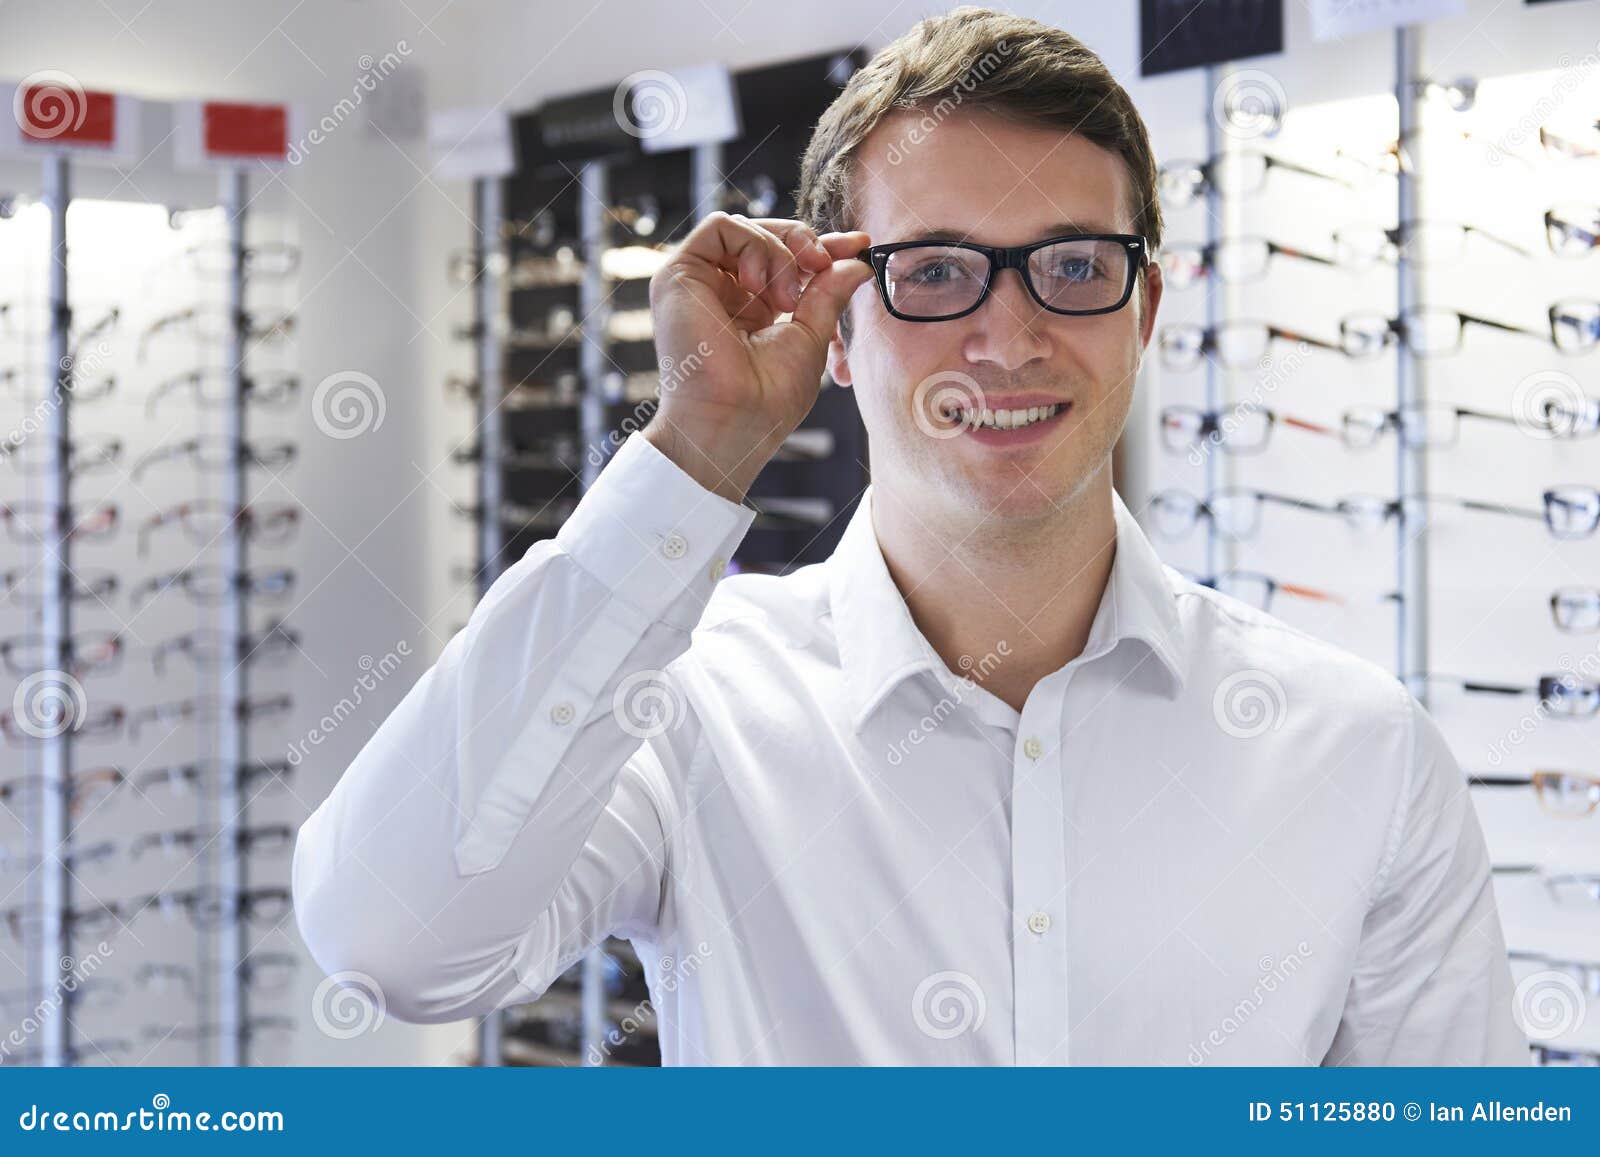 Man Choosing New Glasses at Opticians Stock Photo - Image of display ...